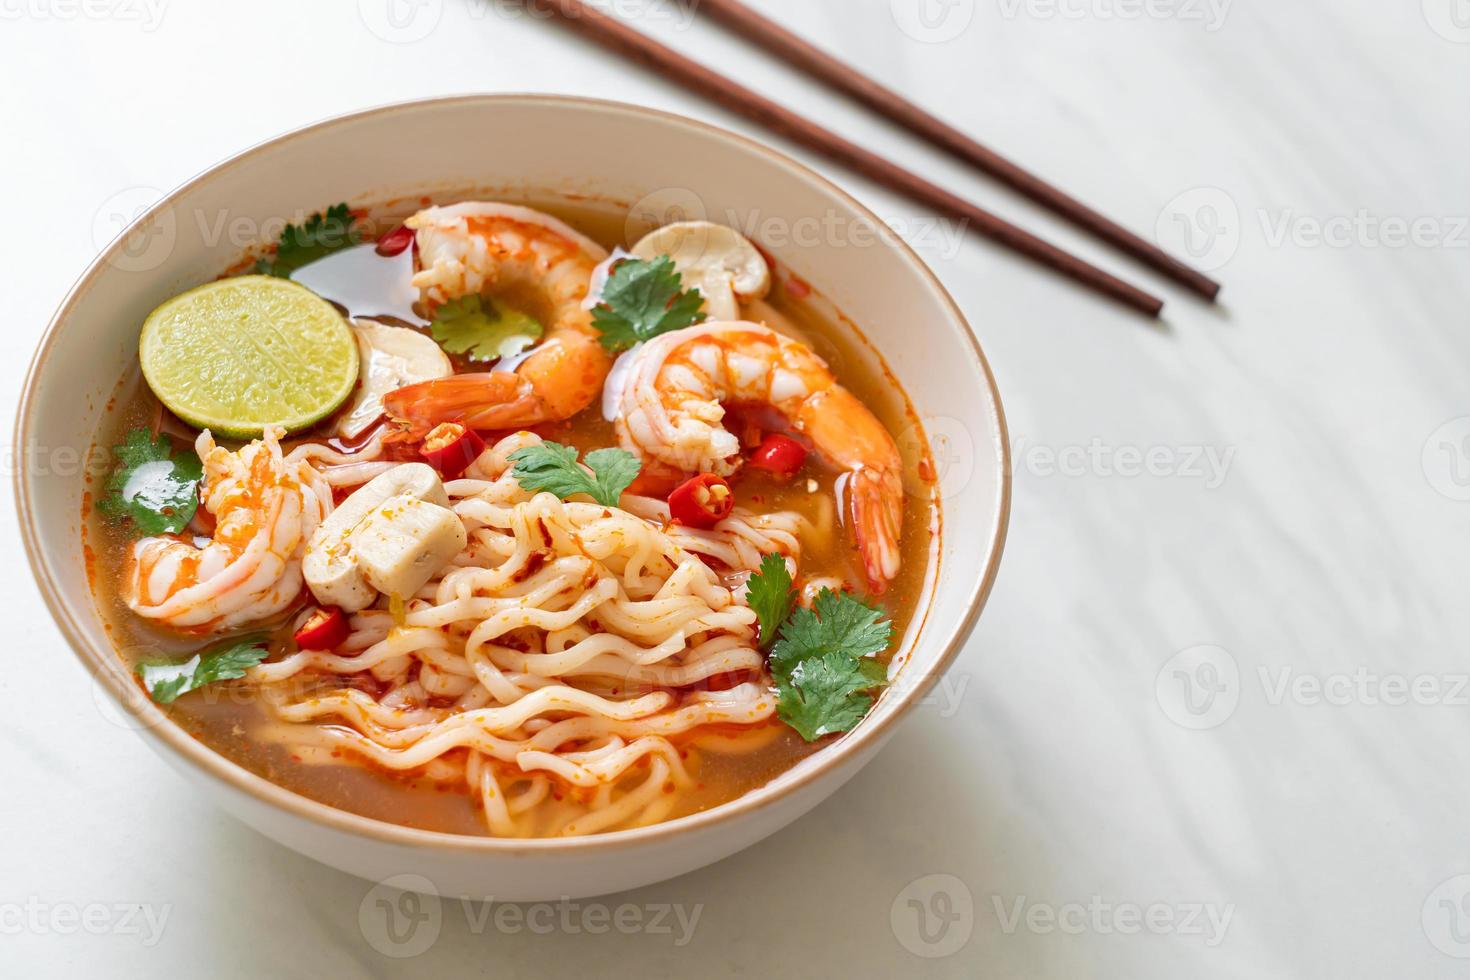 noodles istantanei ramen in zuppa piccante con gamberi tom yum kung - stile asiatico asian foto